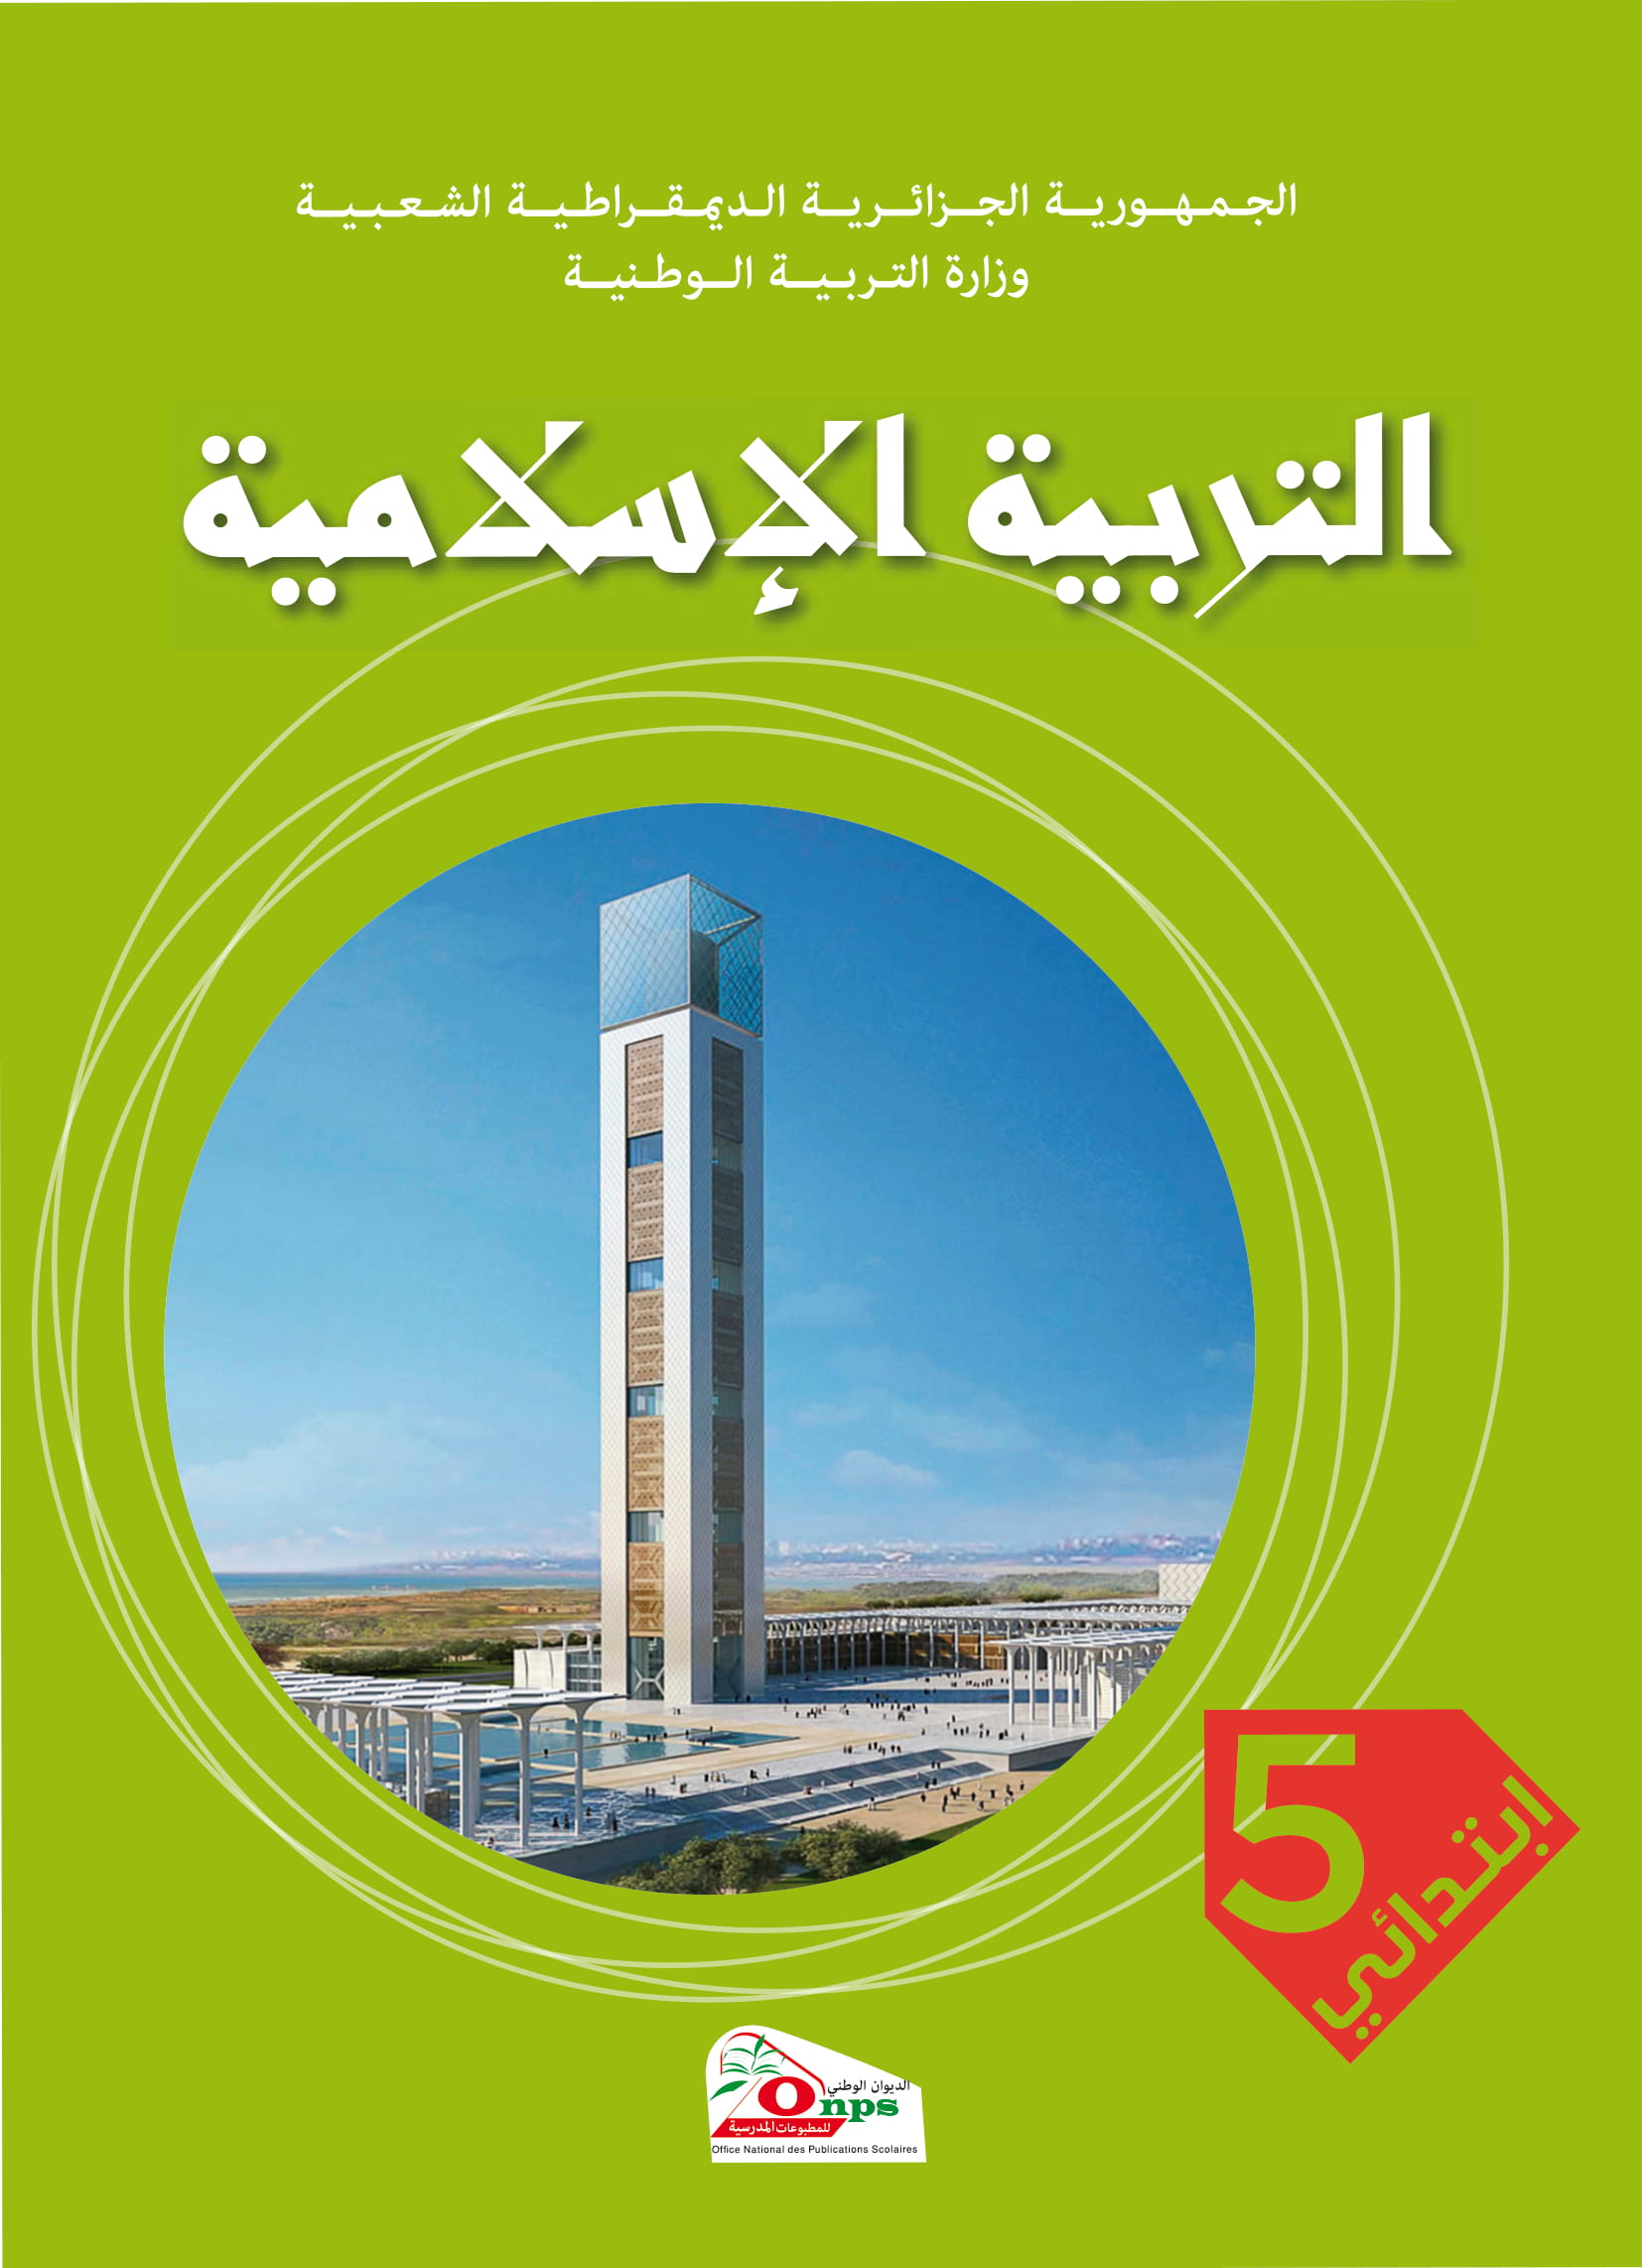 MS 505 Couverture Education Islamique 5Ap 1 - الديوان الوطني للمطبوعات المدرسية